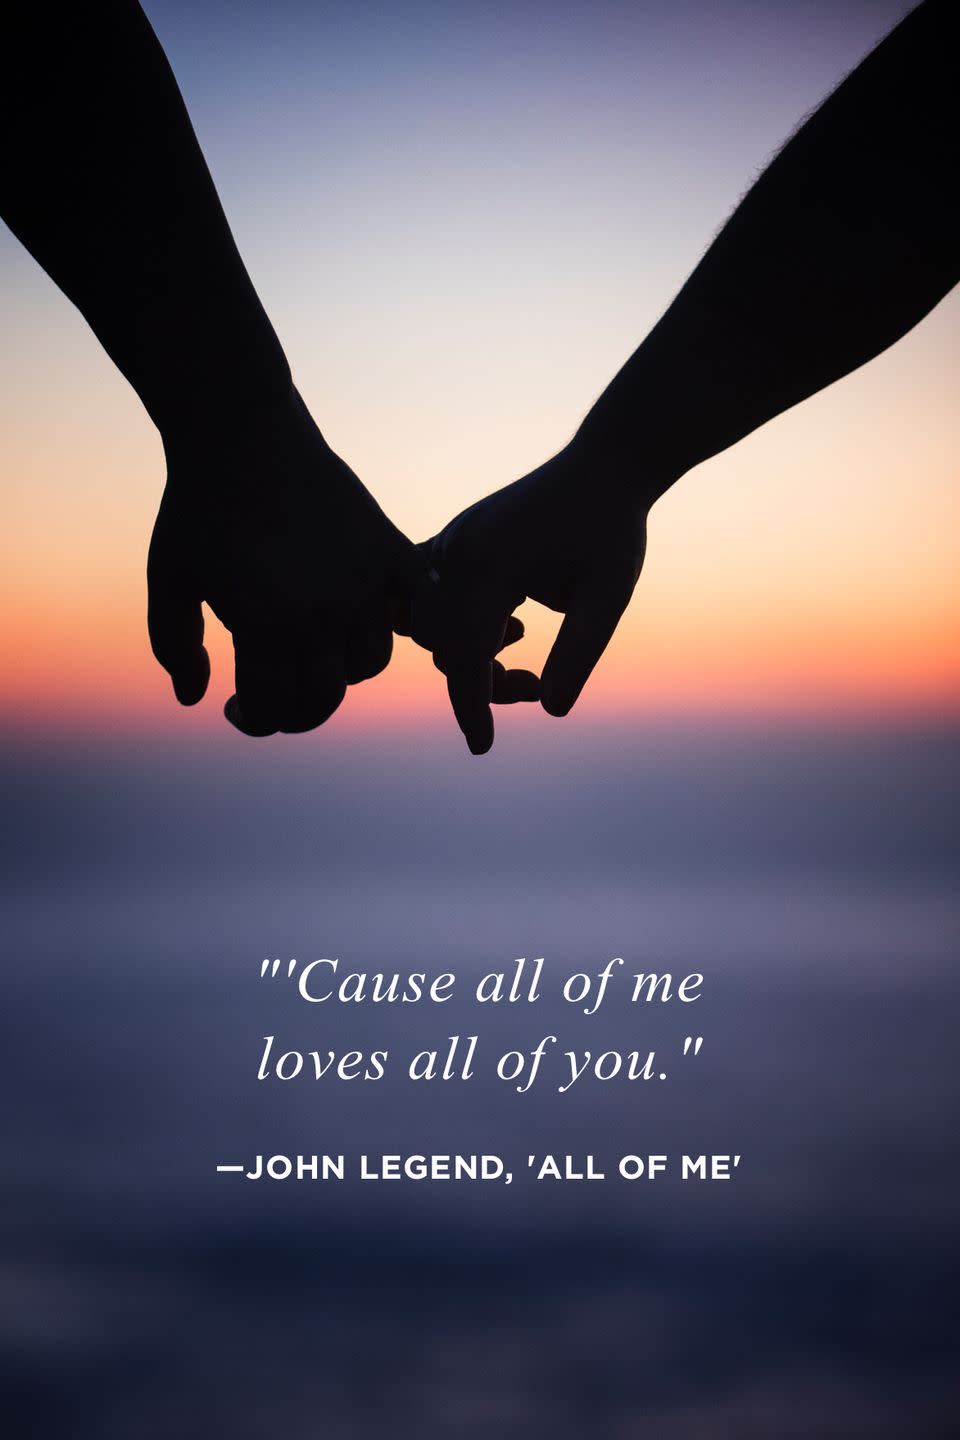 22) John Legend, 'All of Me'